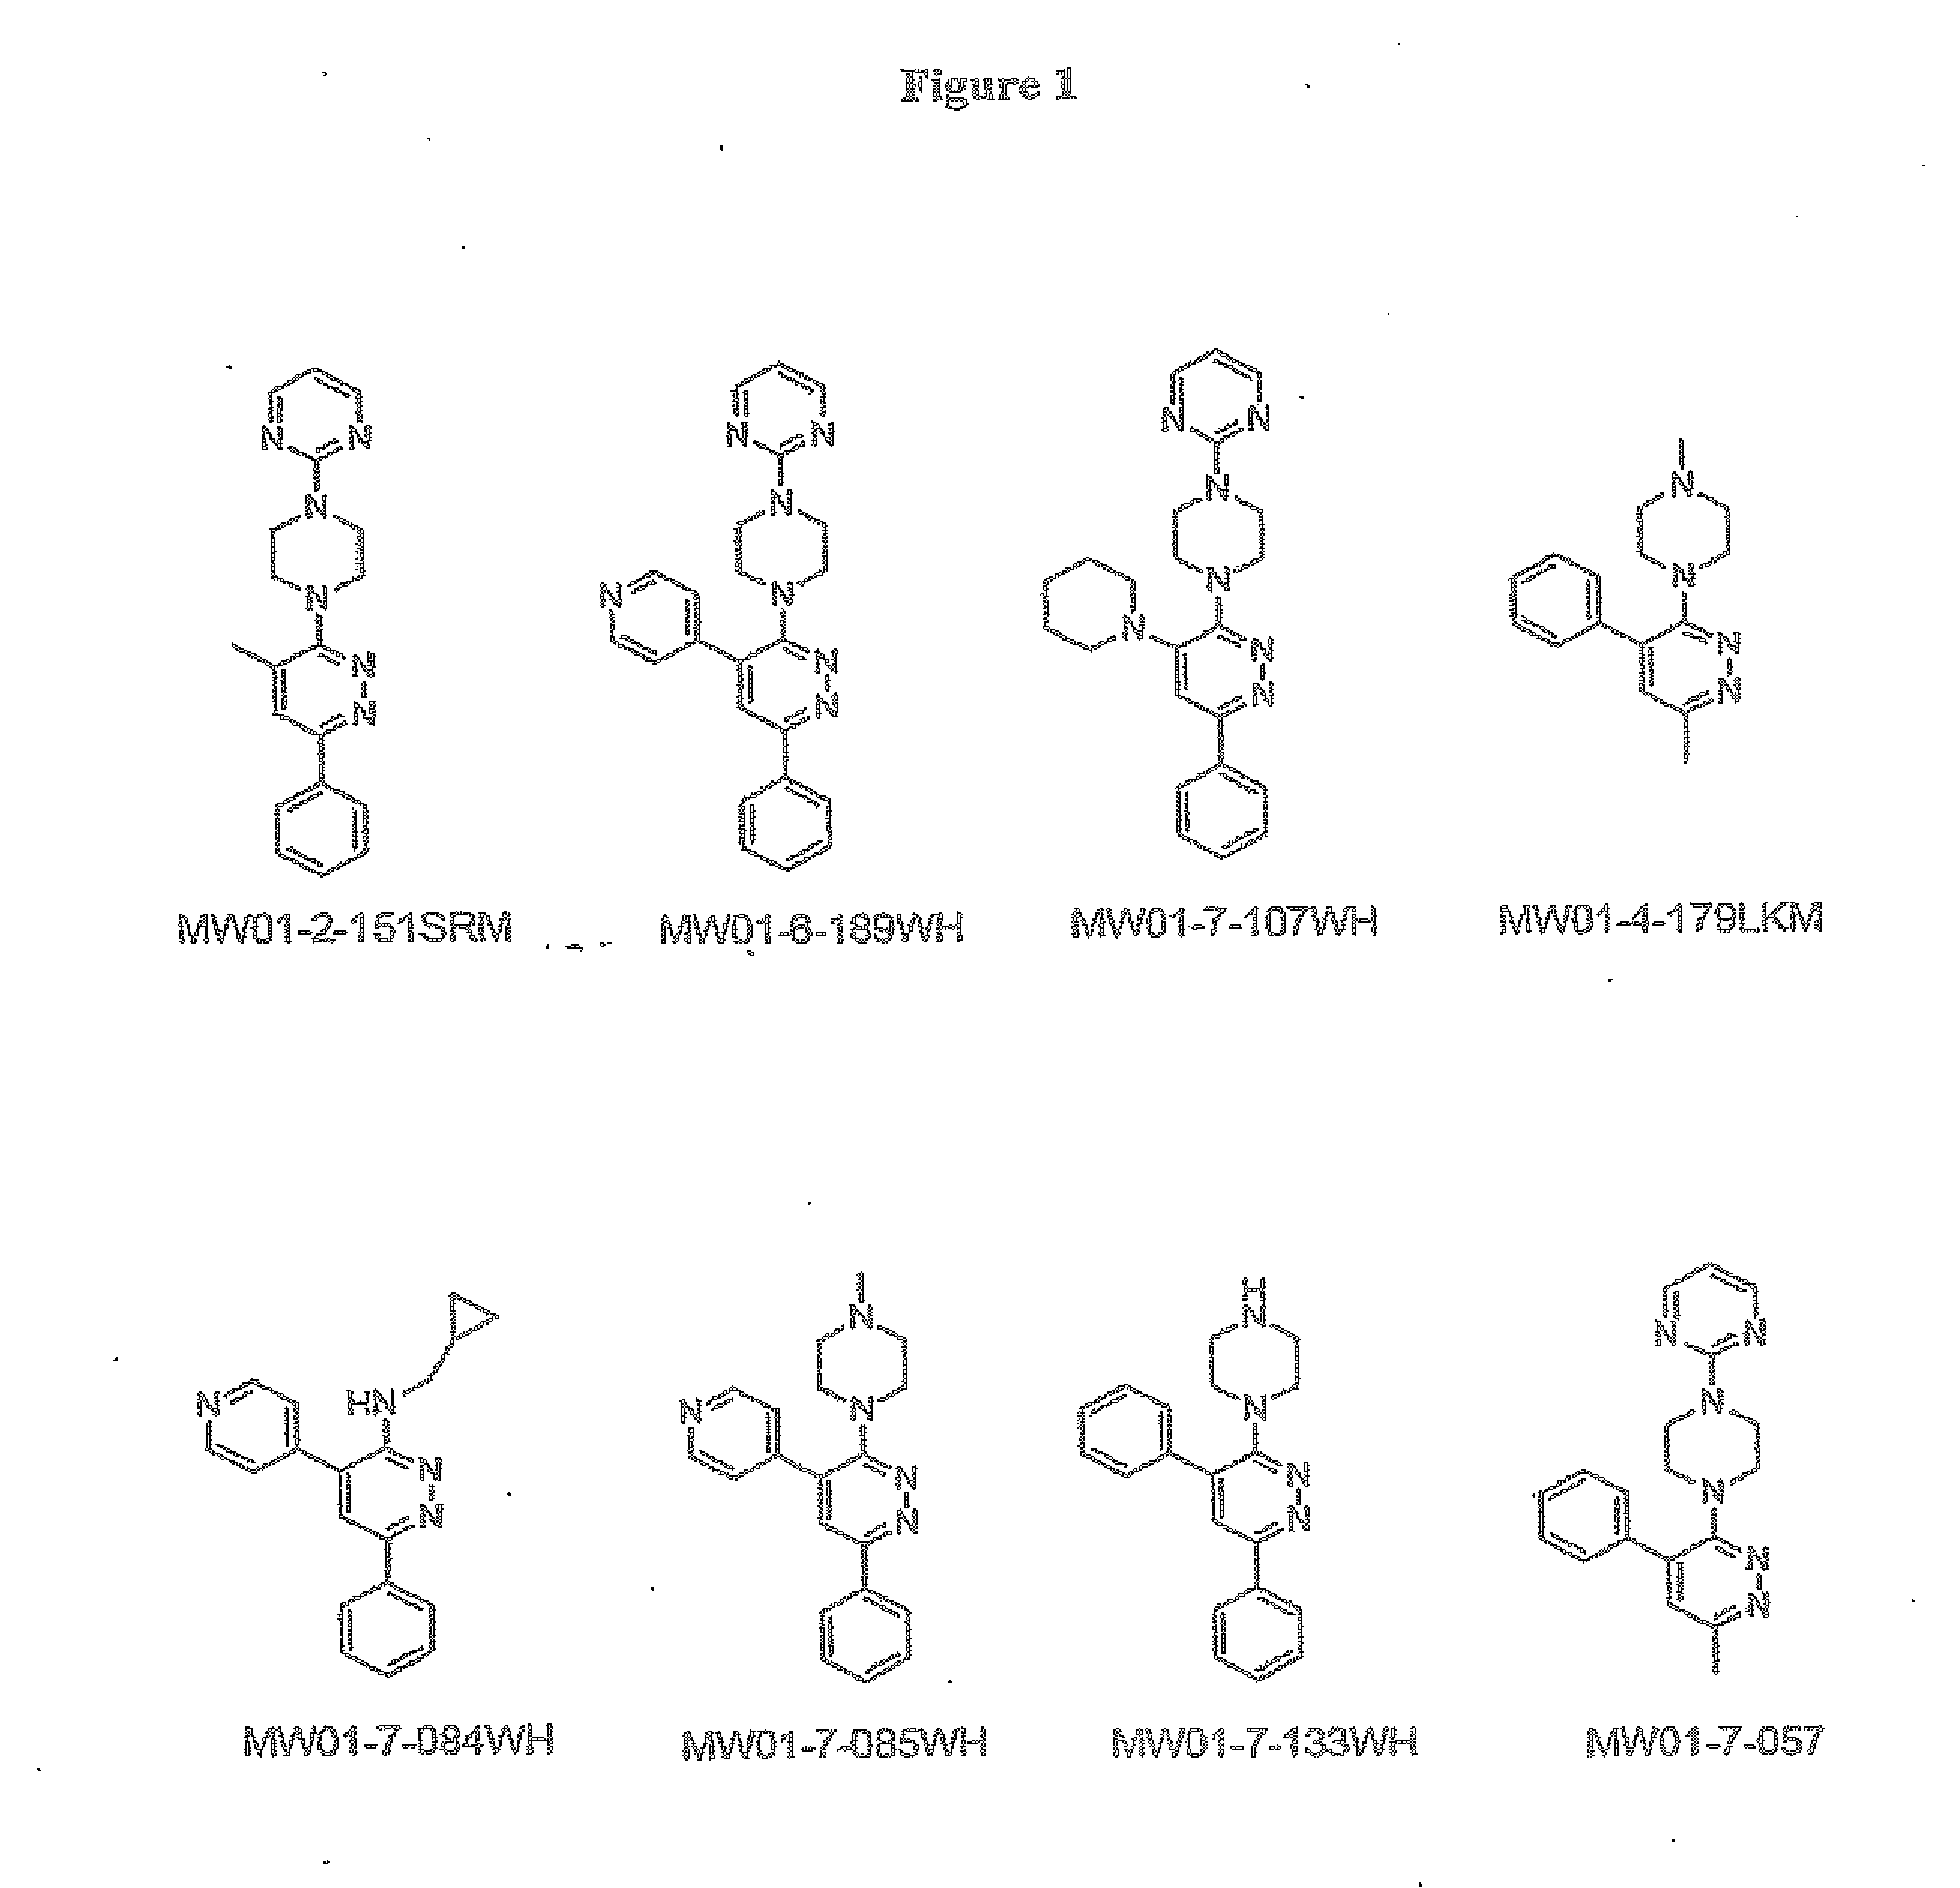 Formulations containing pyridazine compounds